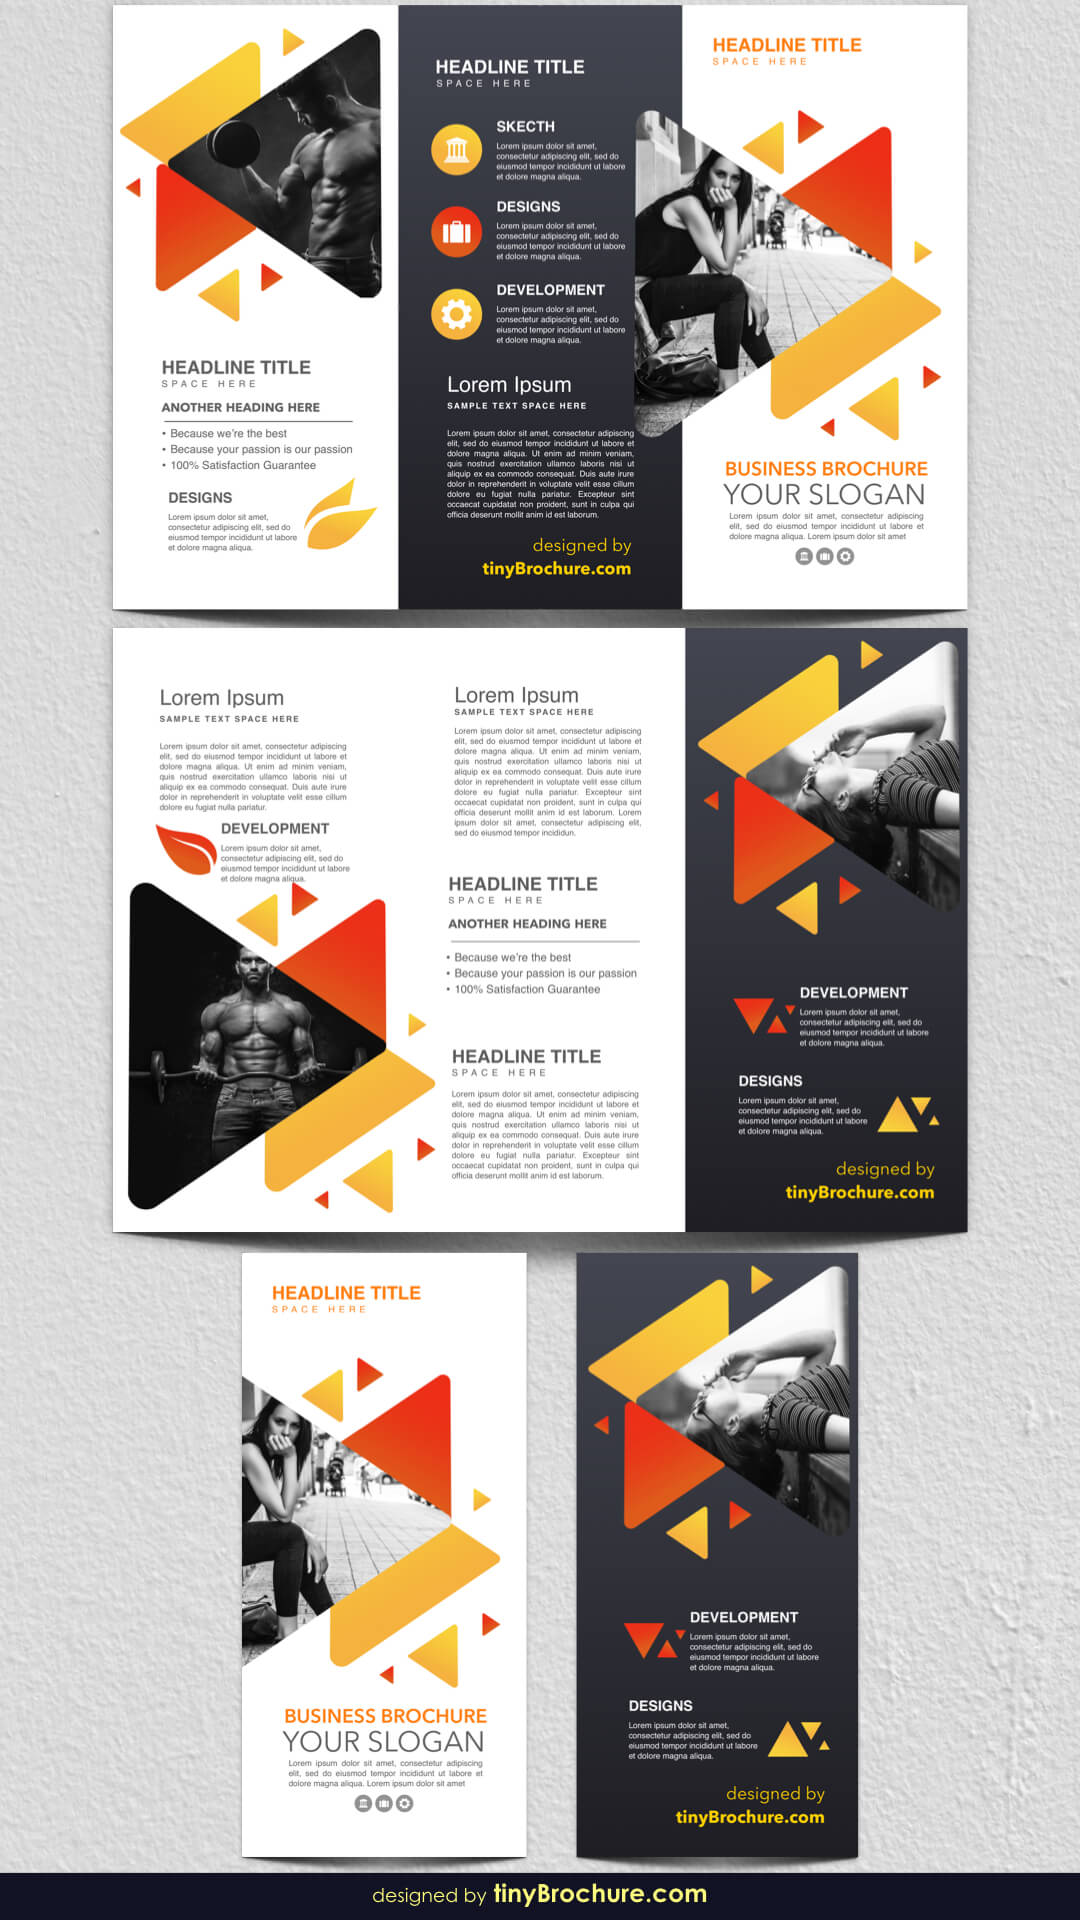 3 Panel Brochure Template Google Docs 2019 | Graphic Design Throughout Brochure Template For Google Docs